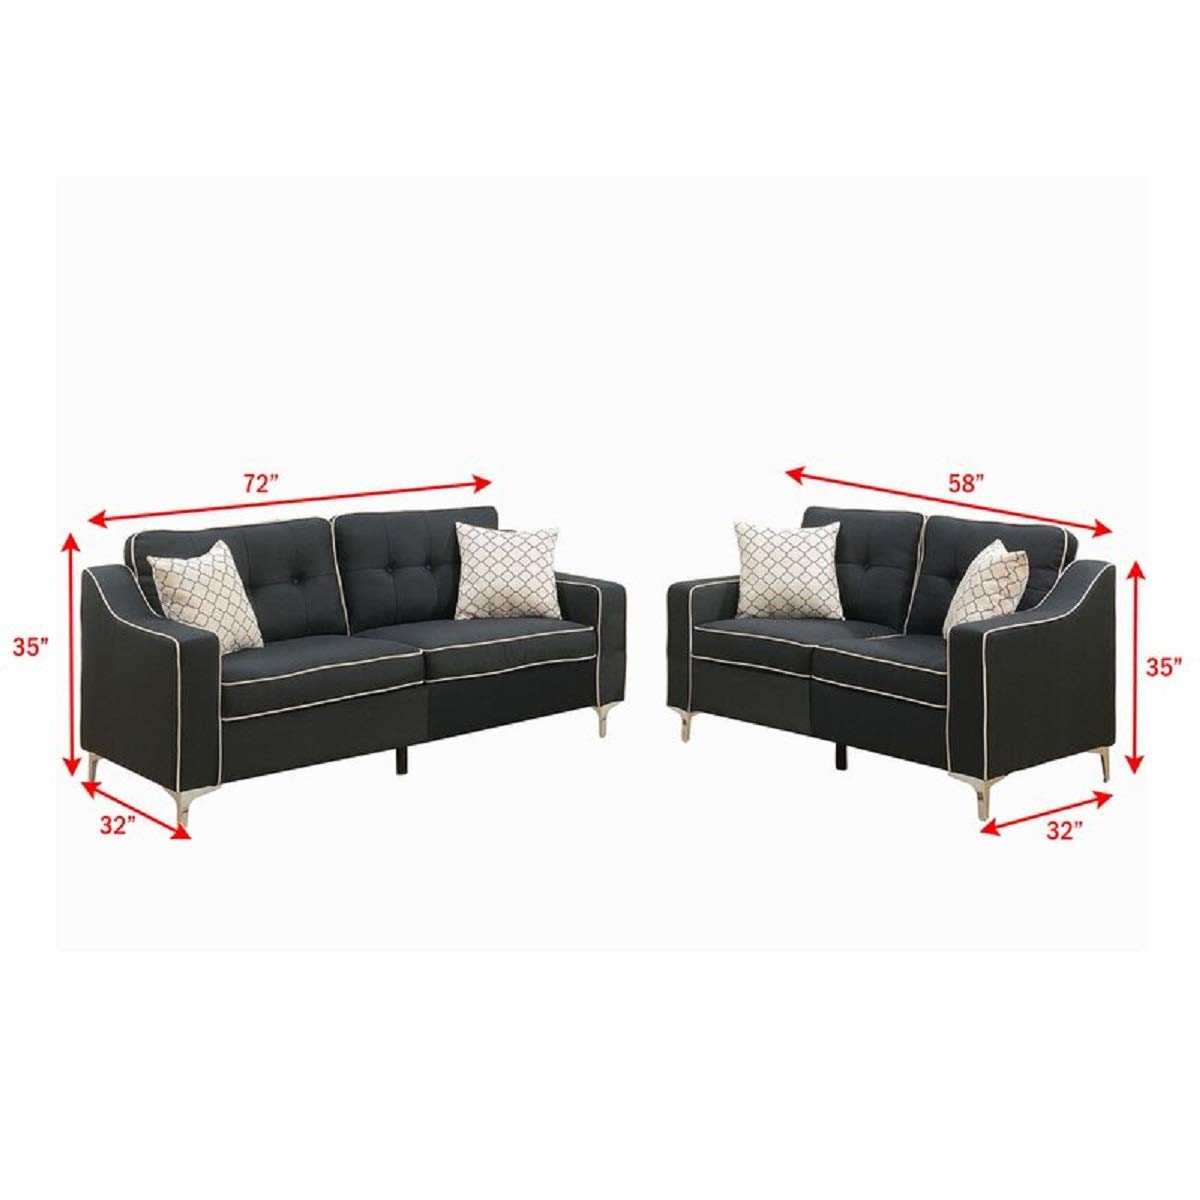 Designer Sofa Set:- AMIA 3+2 Fabric Luxury Furniture Sofa Set (Grey)